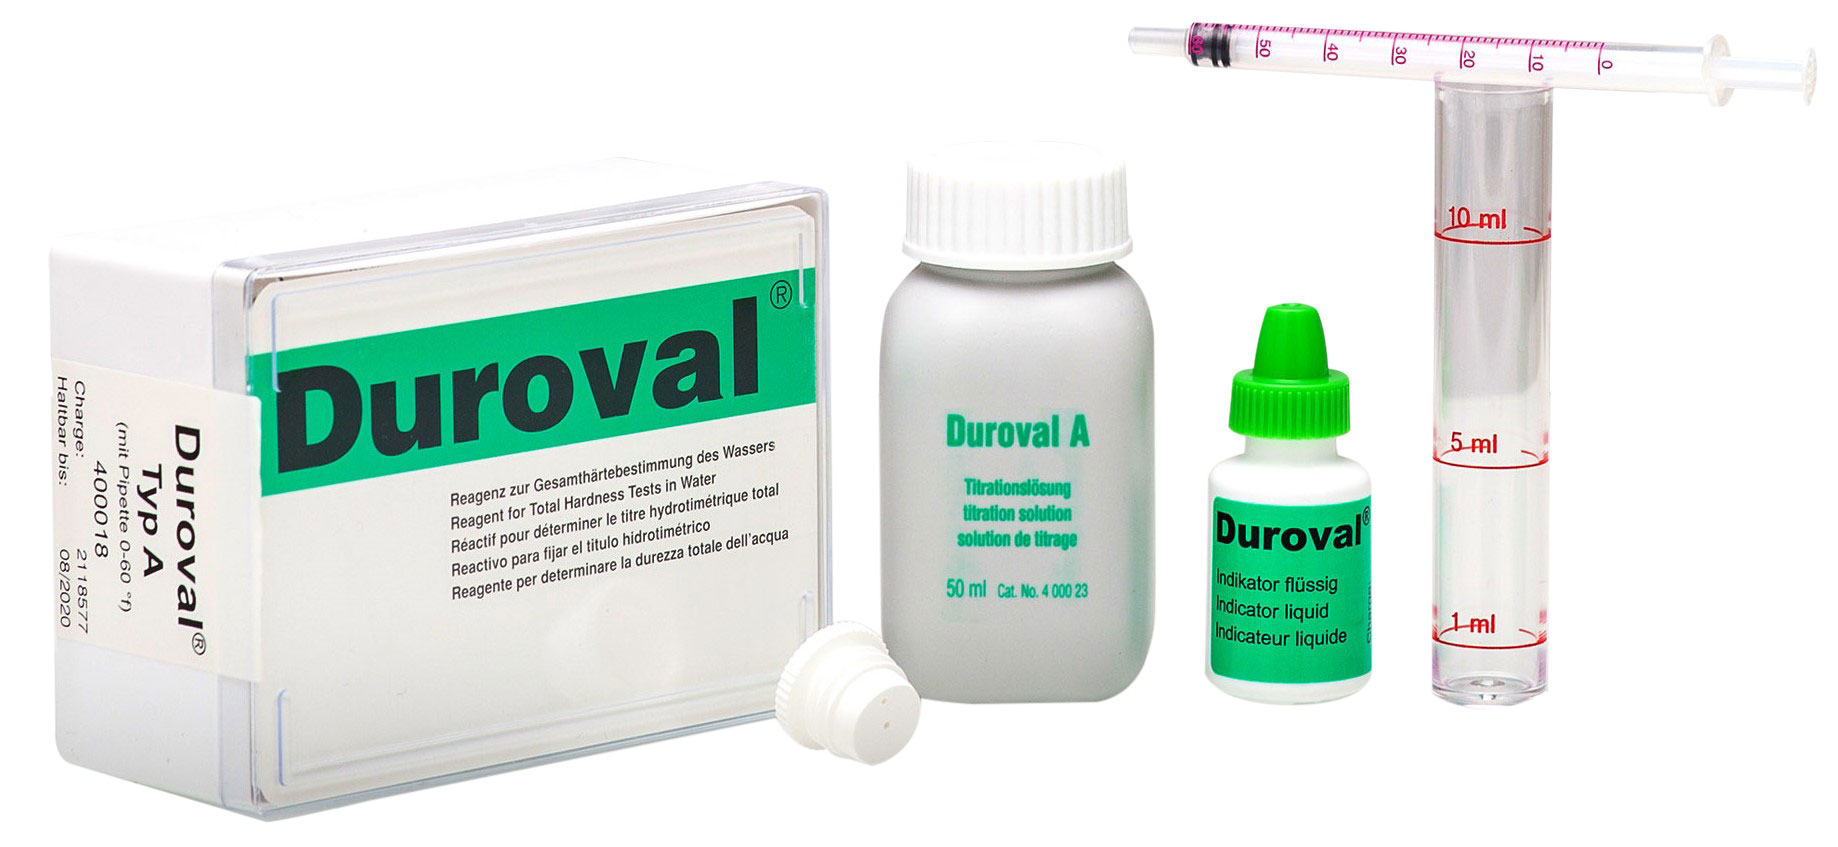 DUROVAL® A Test kit 0-60 °f